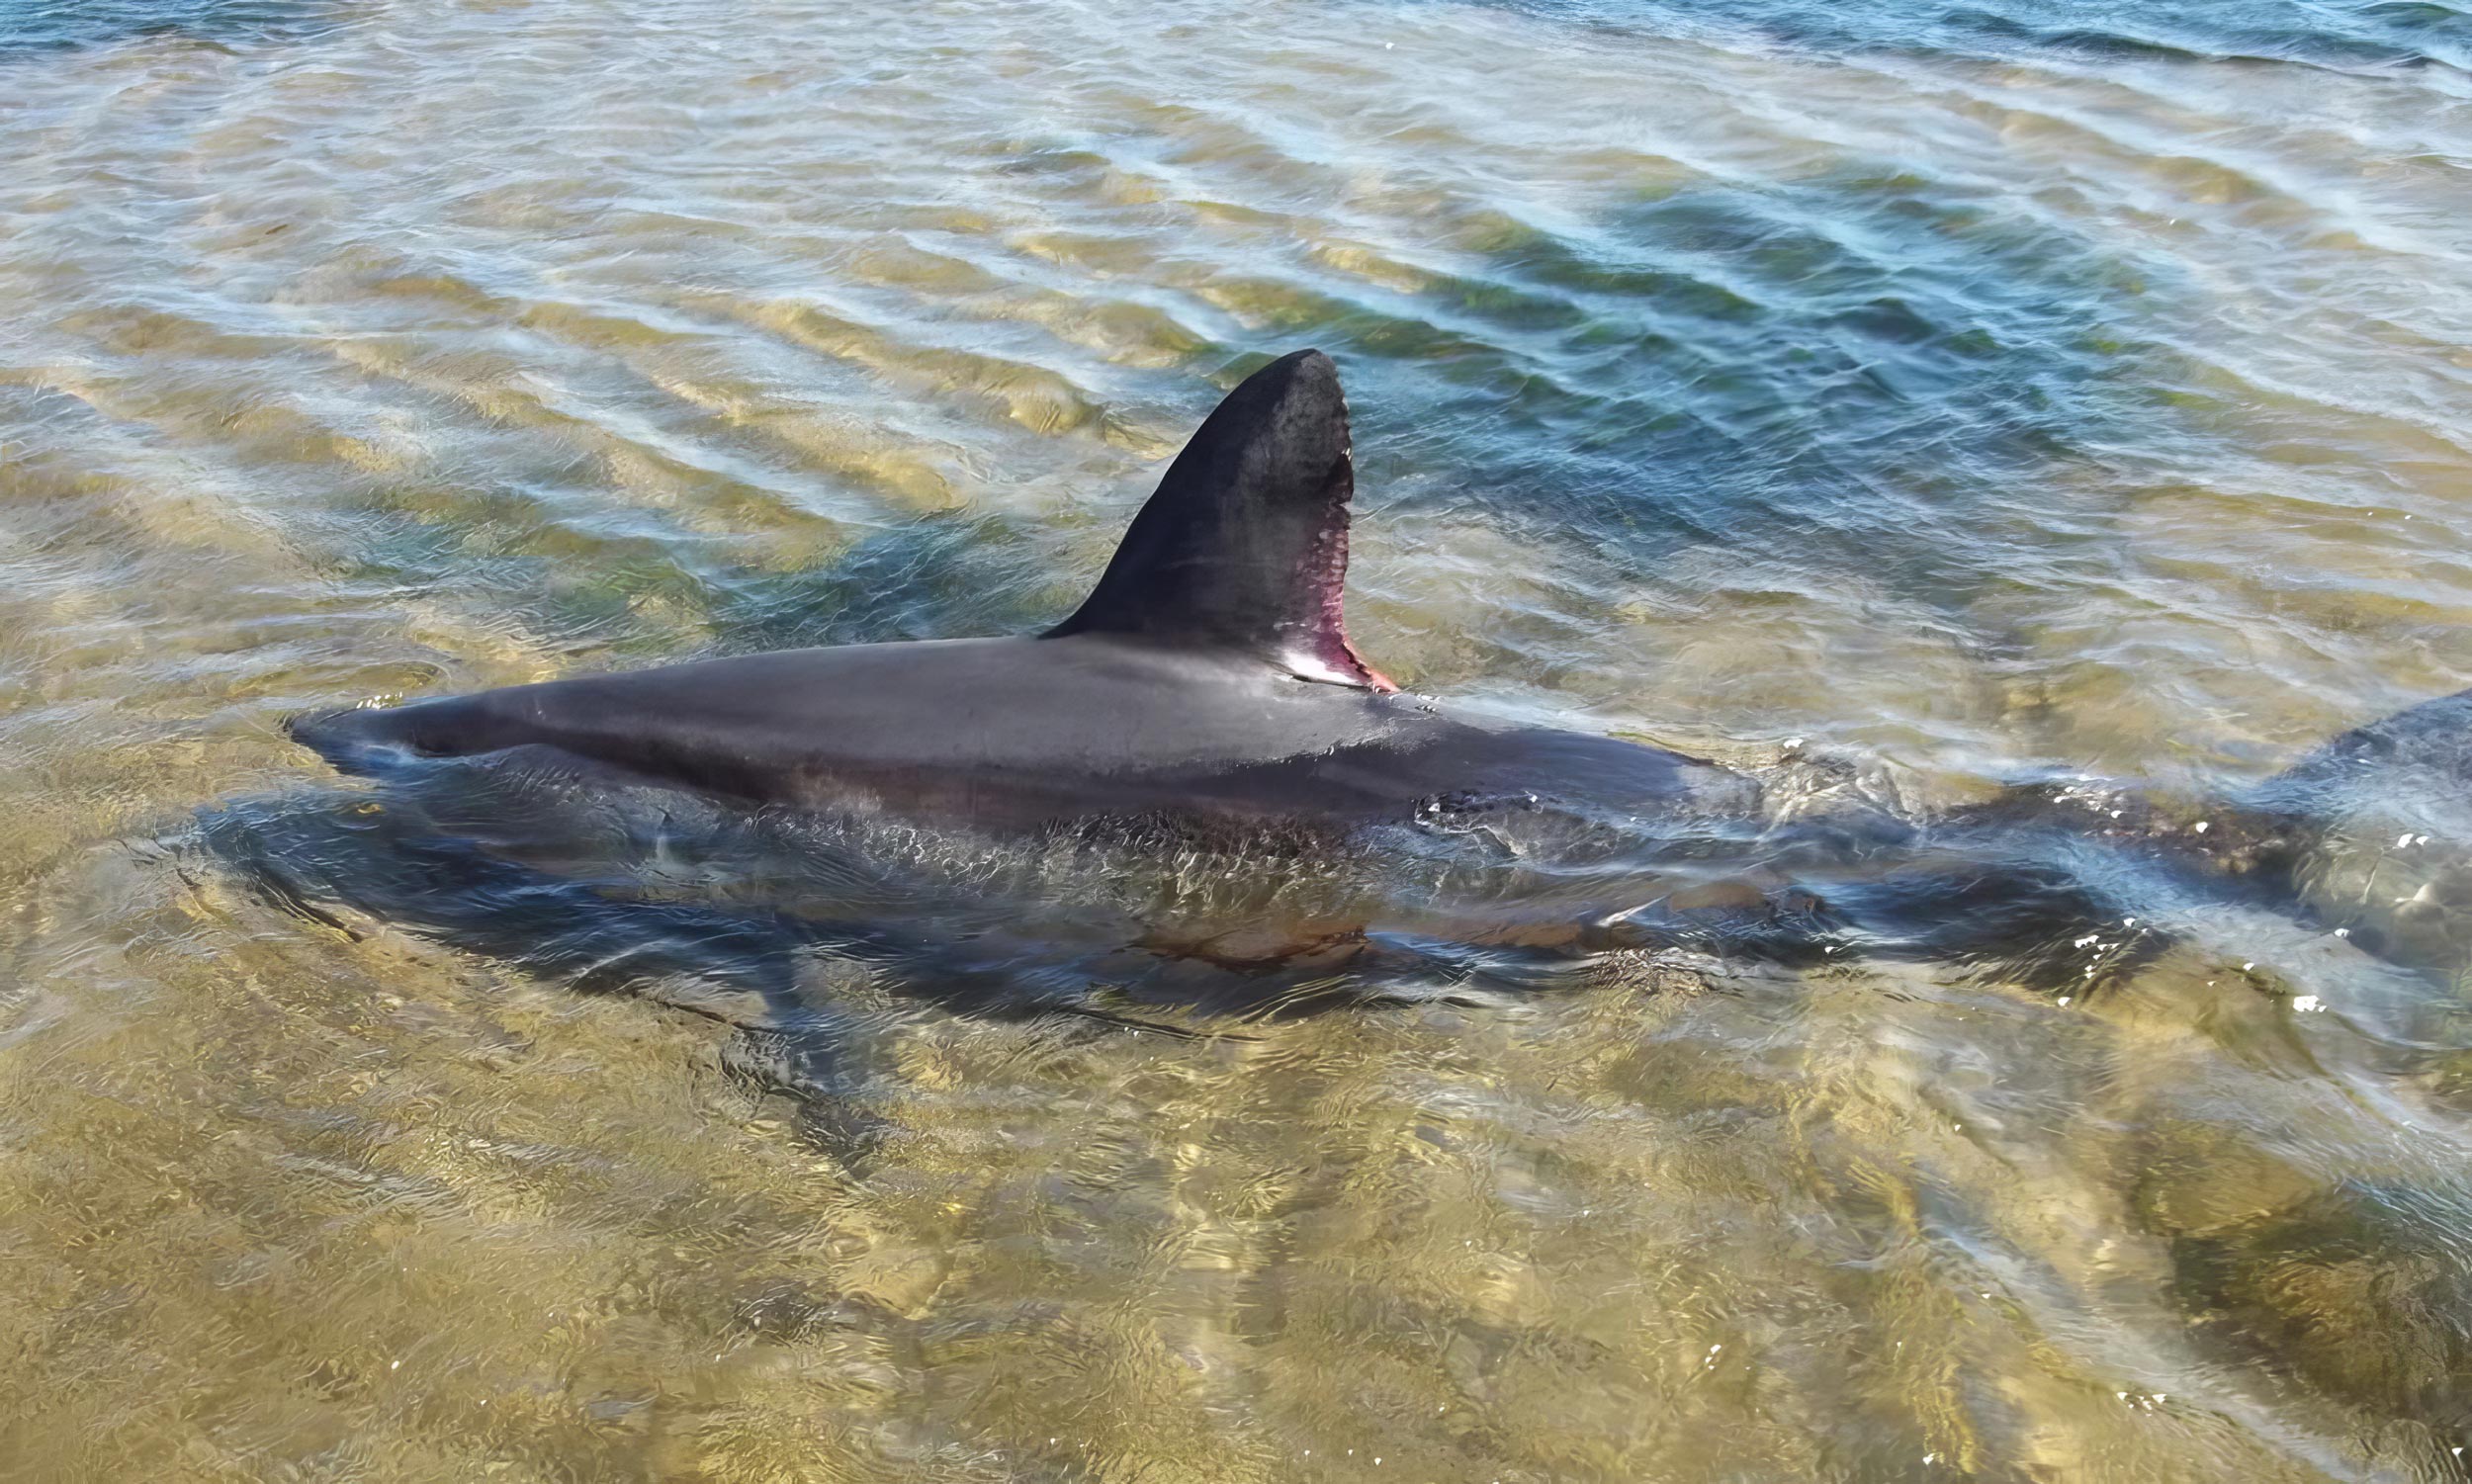 Requin en caoutchouc naturel Lassig - Maman Natur'elle : Ce Requin de la  marque Lassig est fabriqué